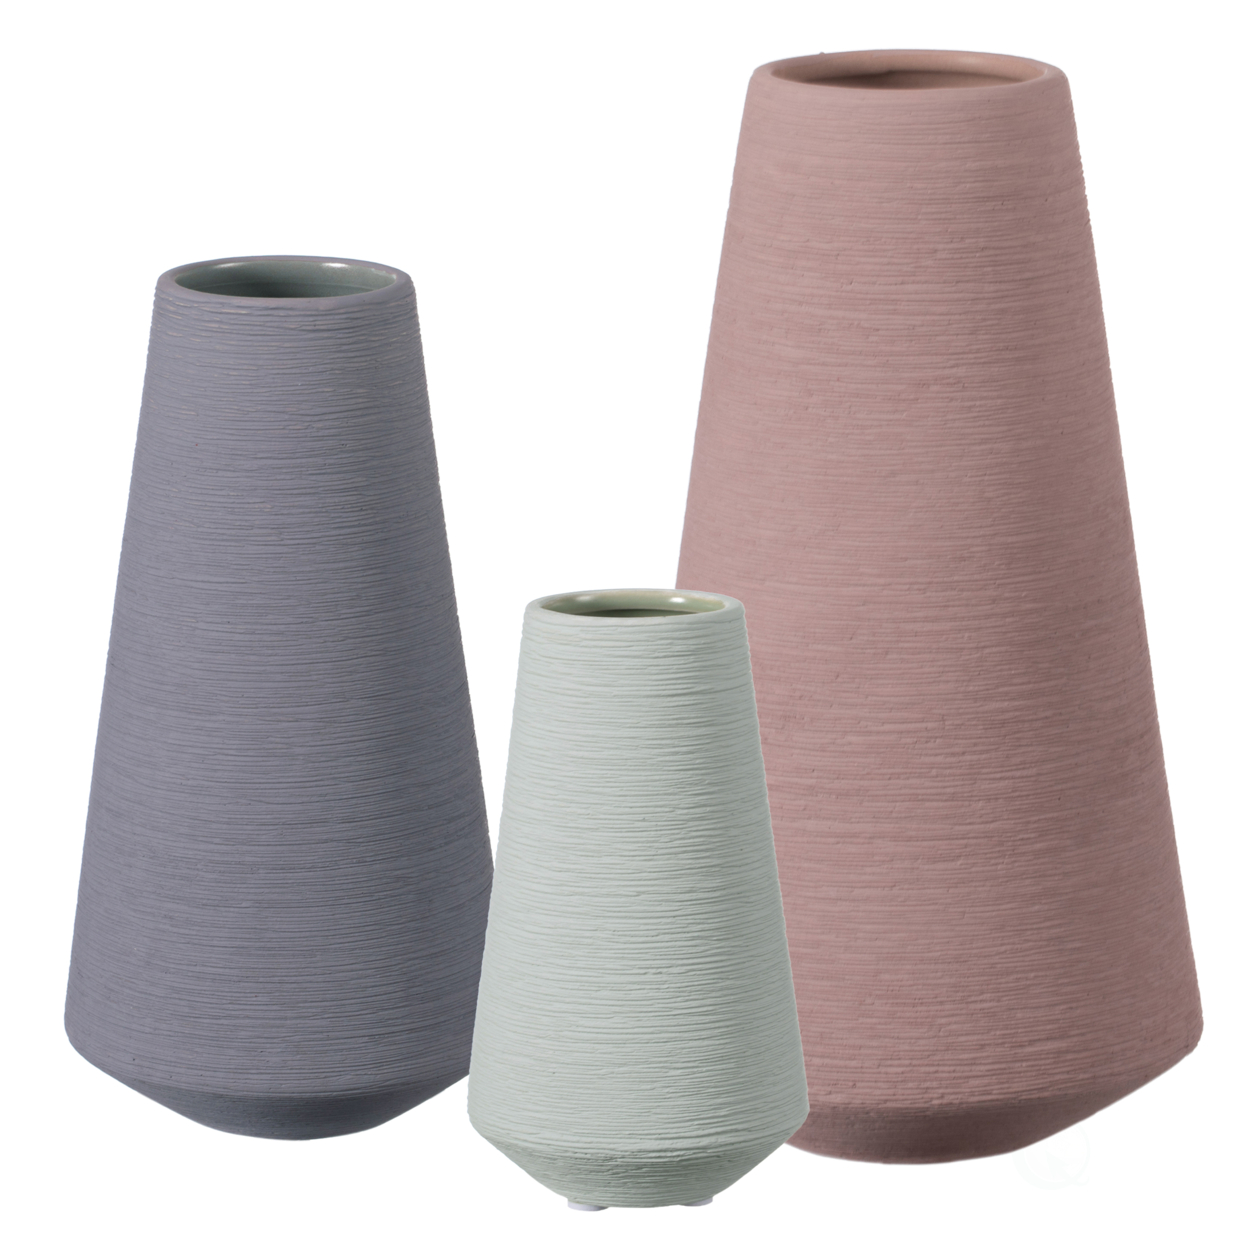 Decorative Ceramic Round Cone Shape Centerpiece Table Vase - Multi